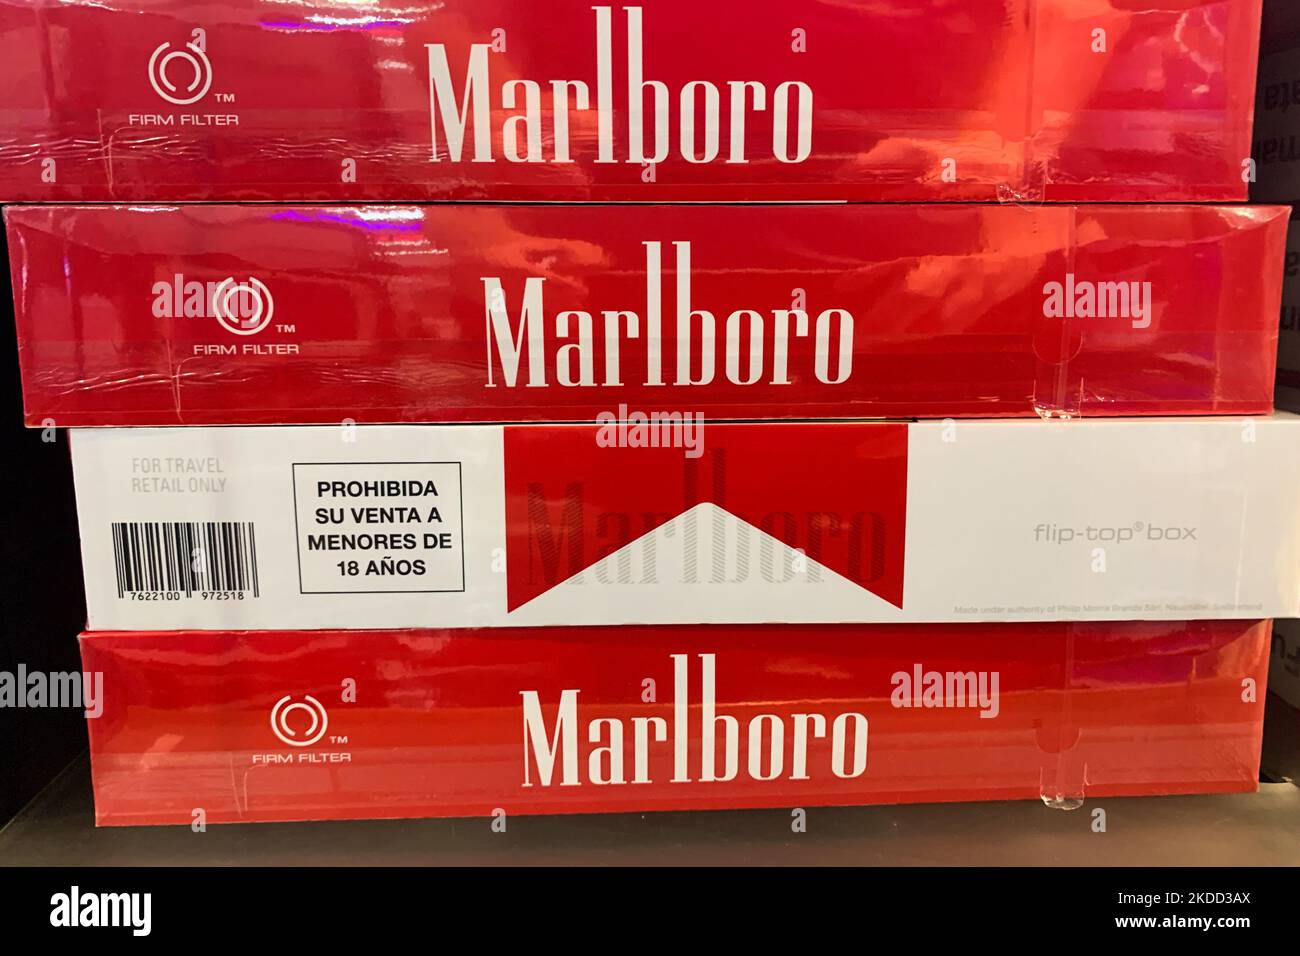 Marlboro packaging are seen in a travel retail store in Madrid, Spain on July 1, 2022. (Photo by Jakub Porzycki/NurPhoto) Stock Photo